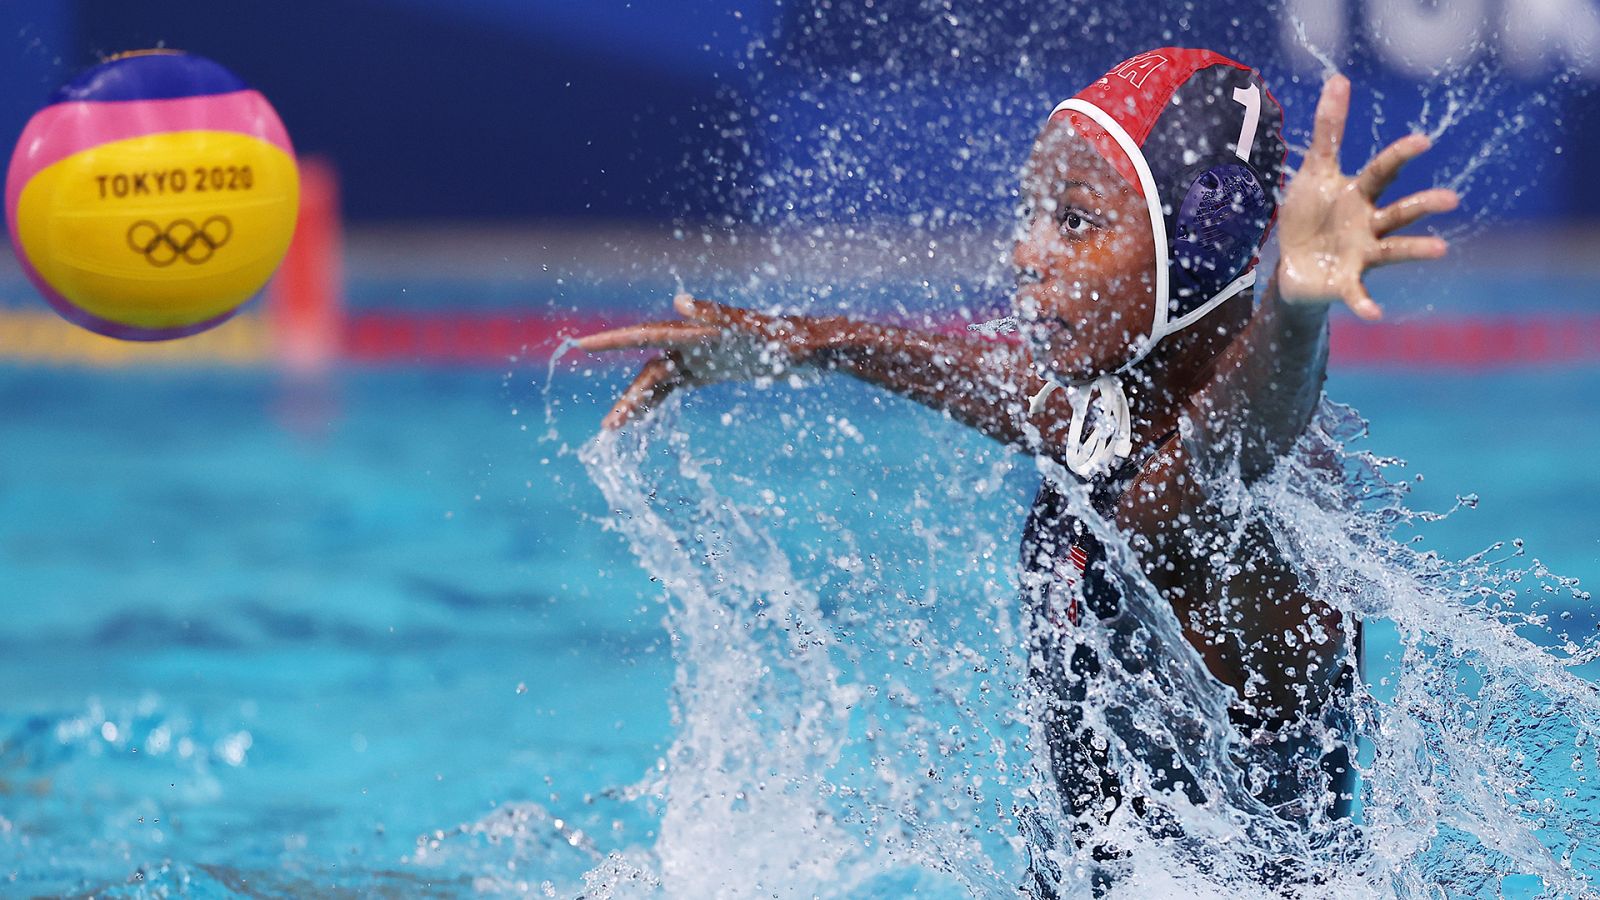 Waterpolo femenino. Semifinal: C.O.Ruso - EEUU | Tokio 2020